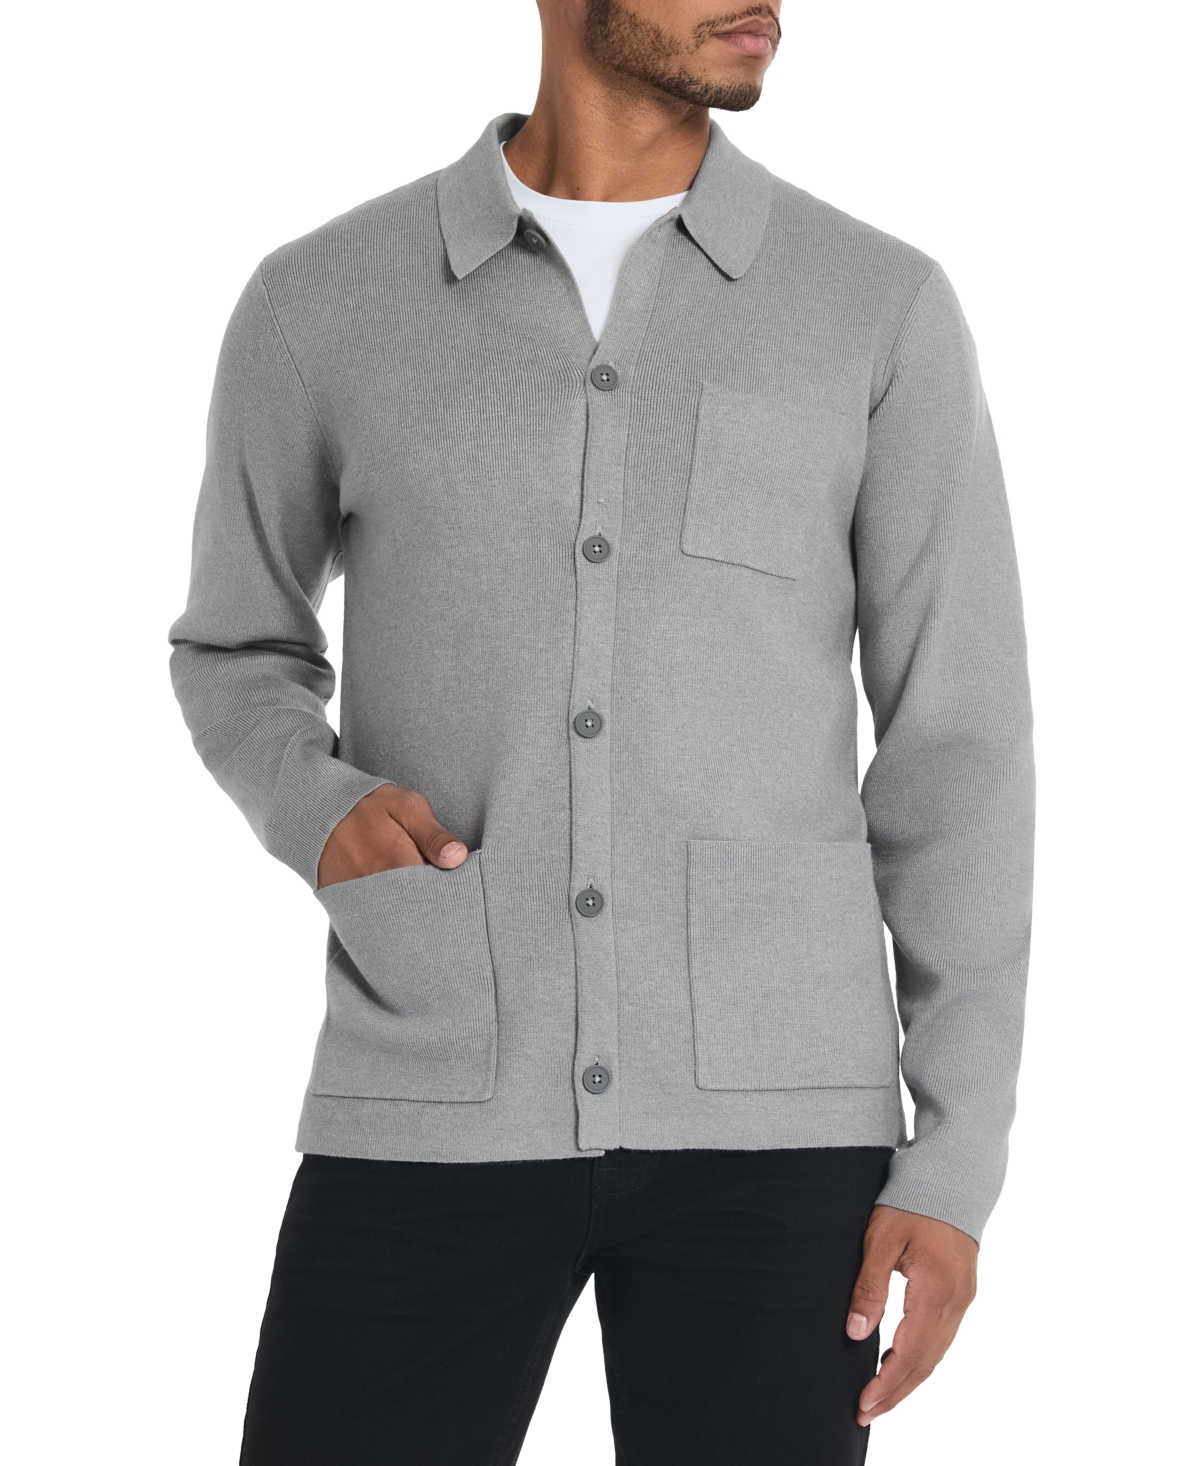 Men's Sport Shirt Sweater - Grey/Heather